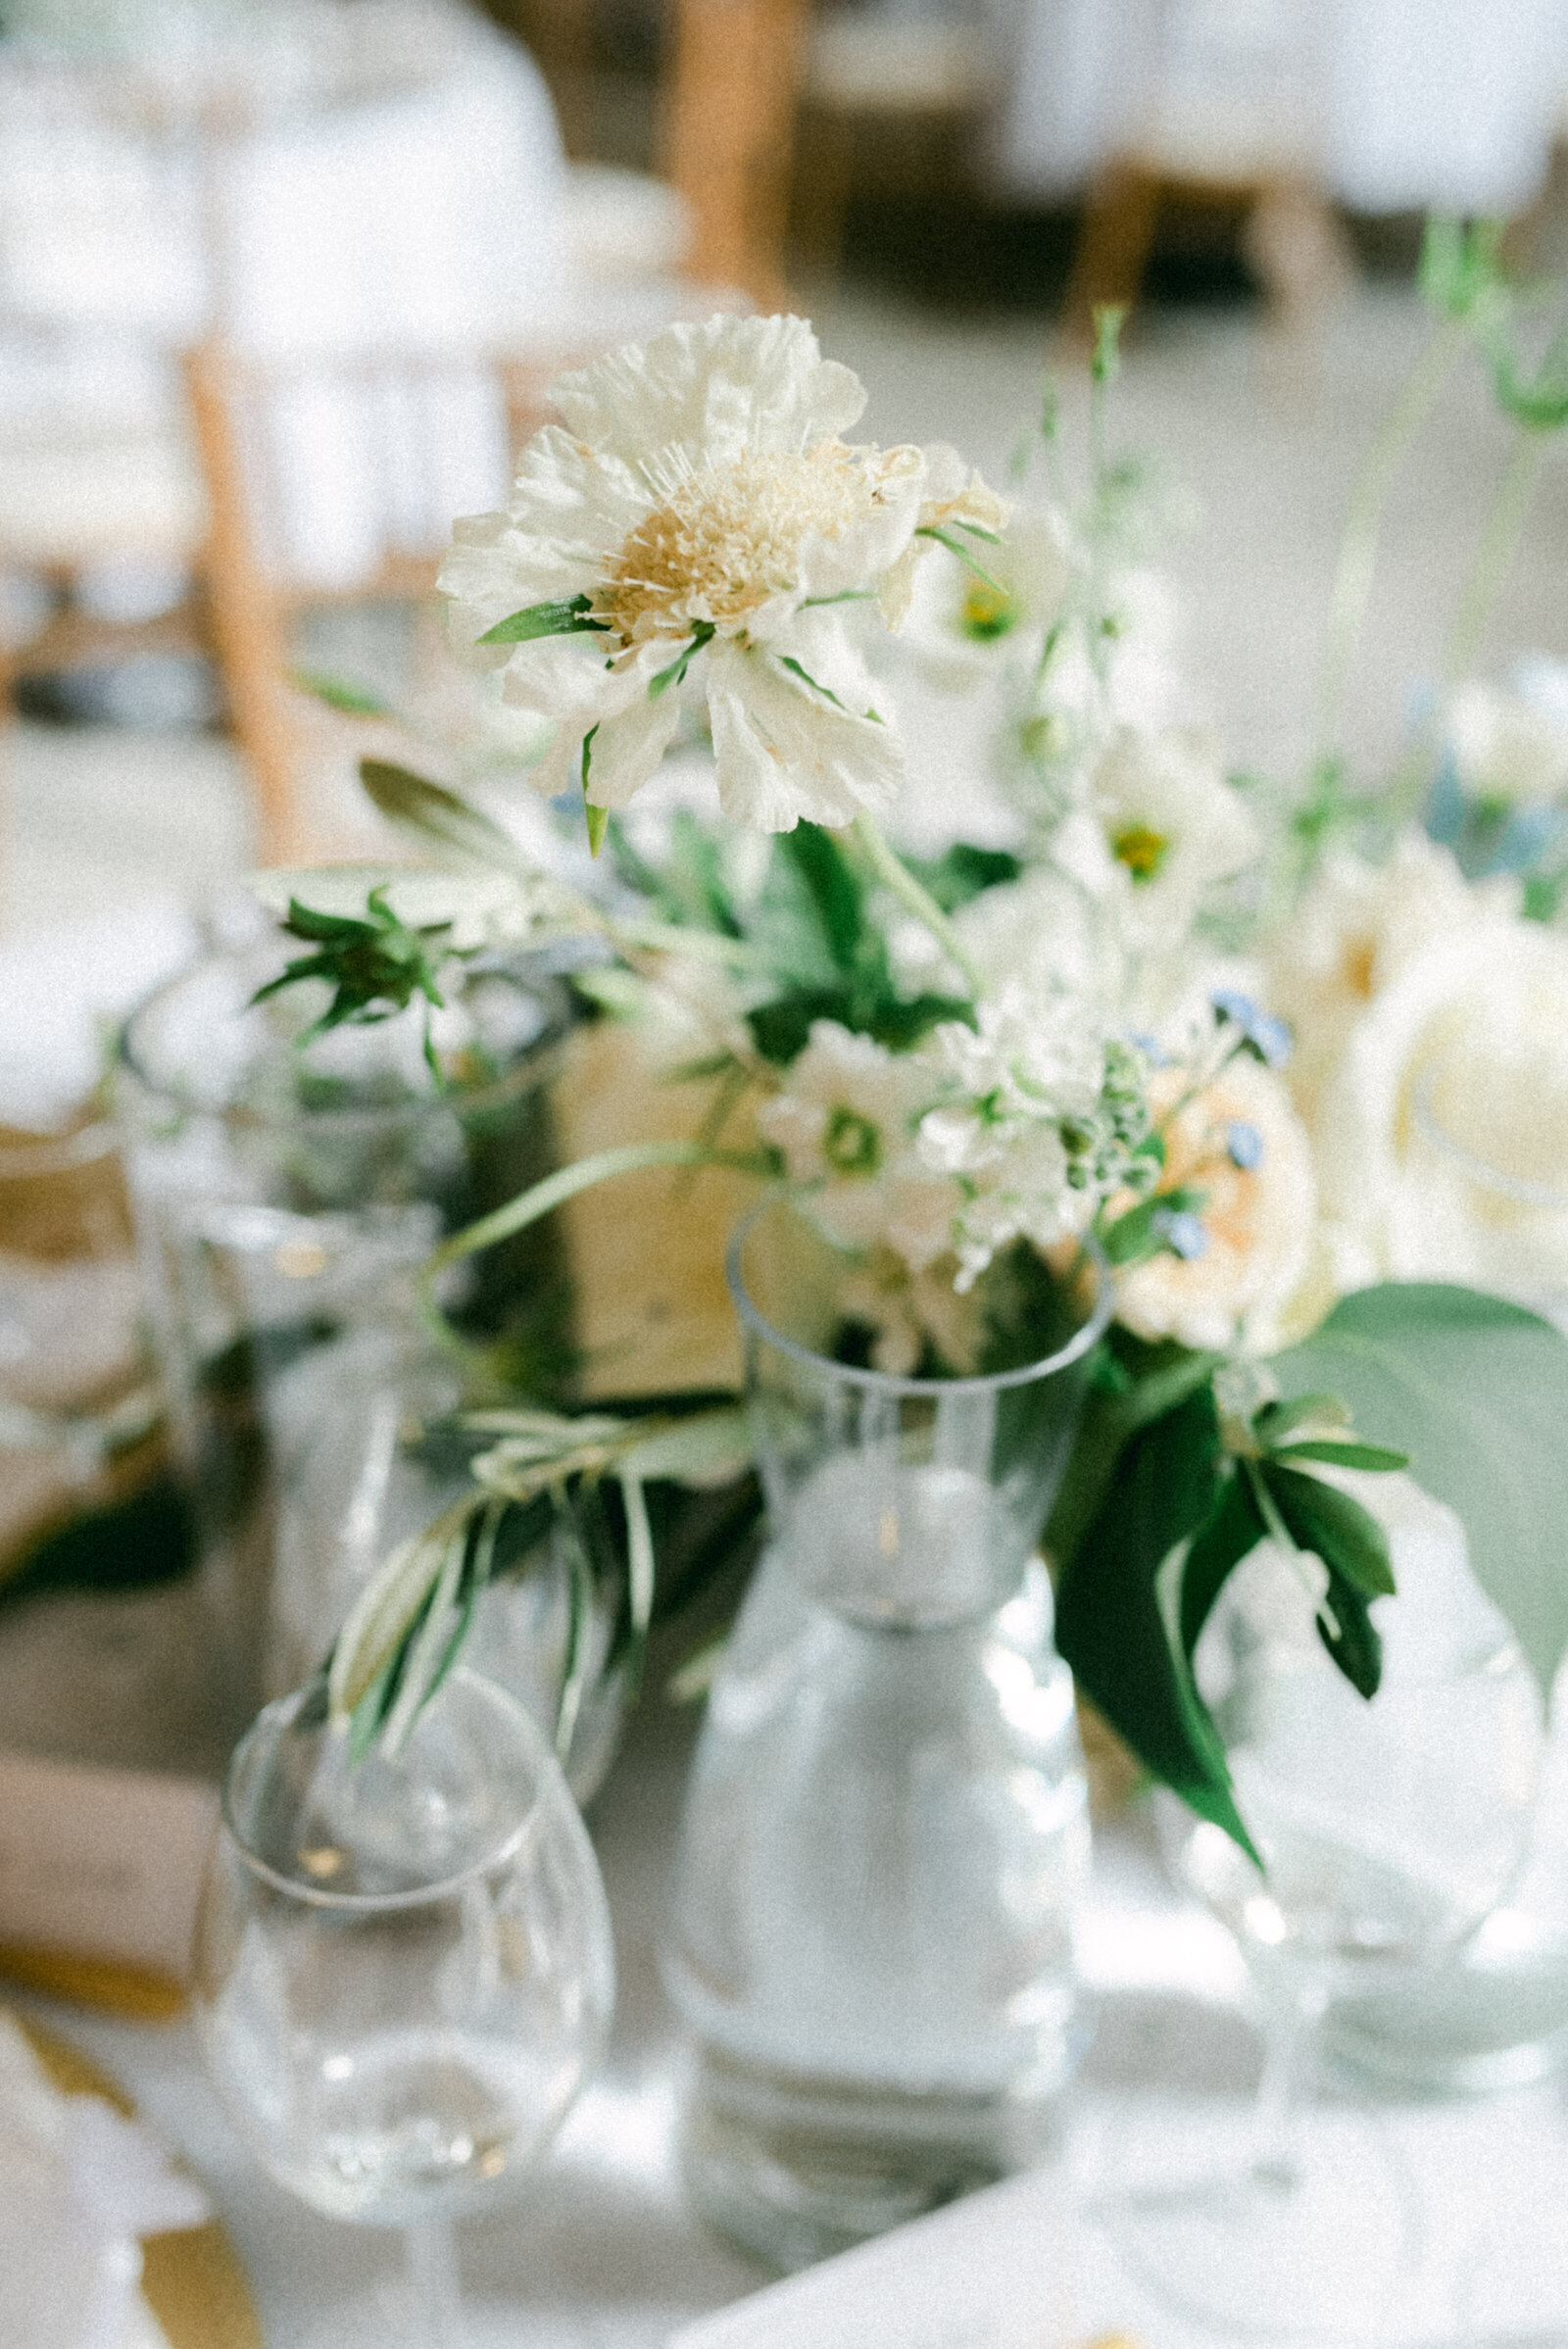 Wedding table setting photographed by wedding photographer Hannika Gabrielsson.